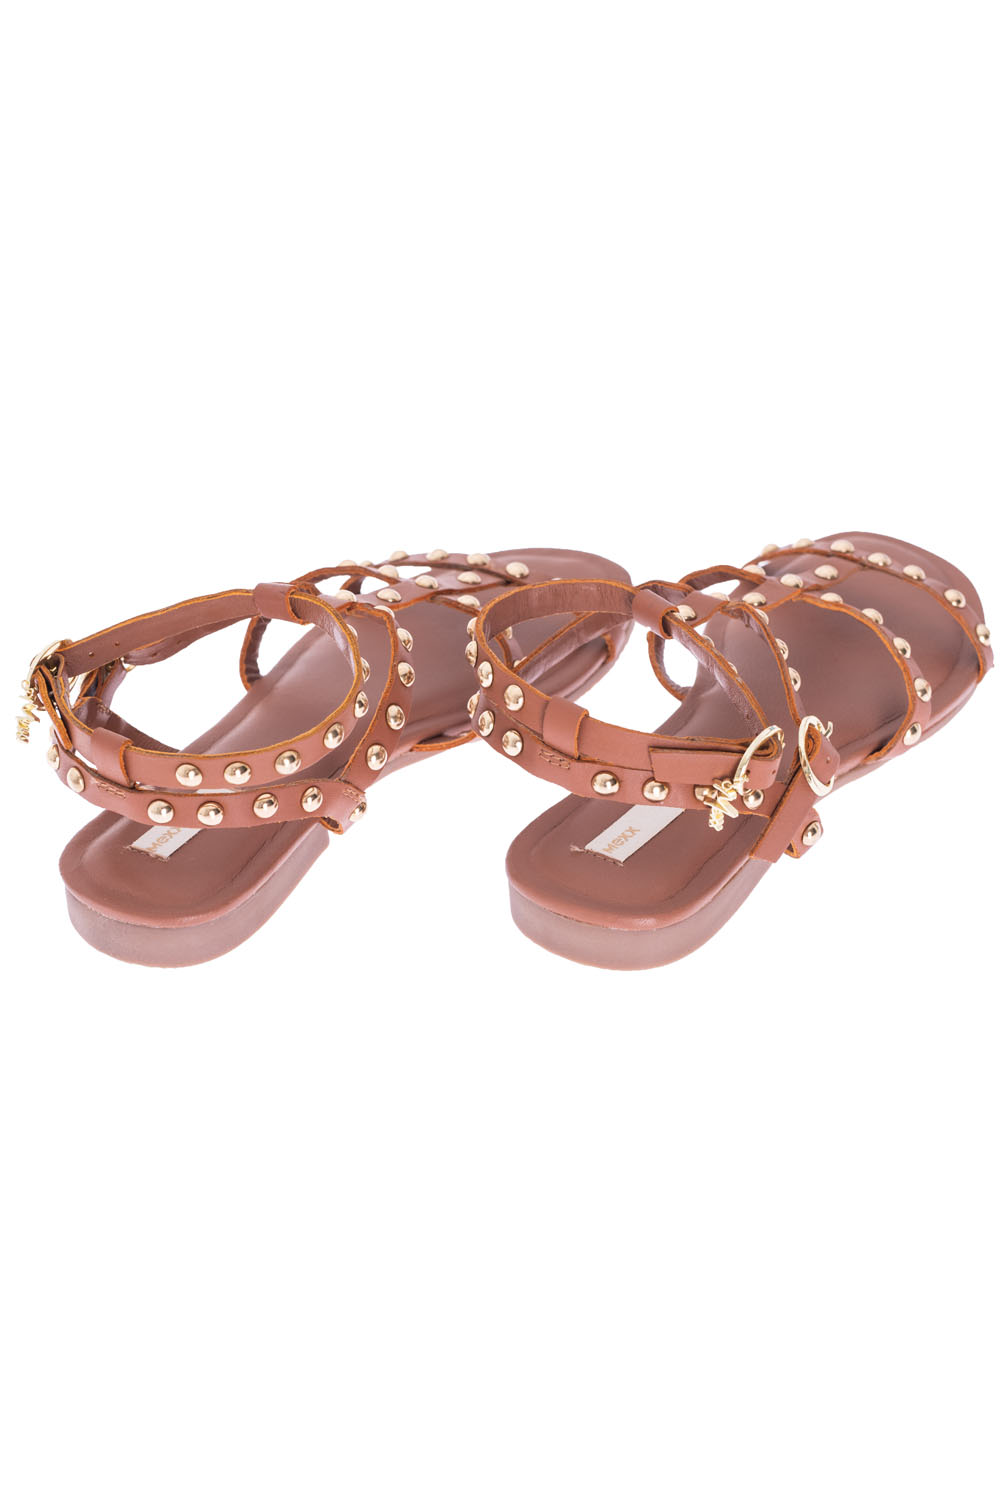 “Gladiator” Studded Sandals